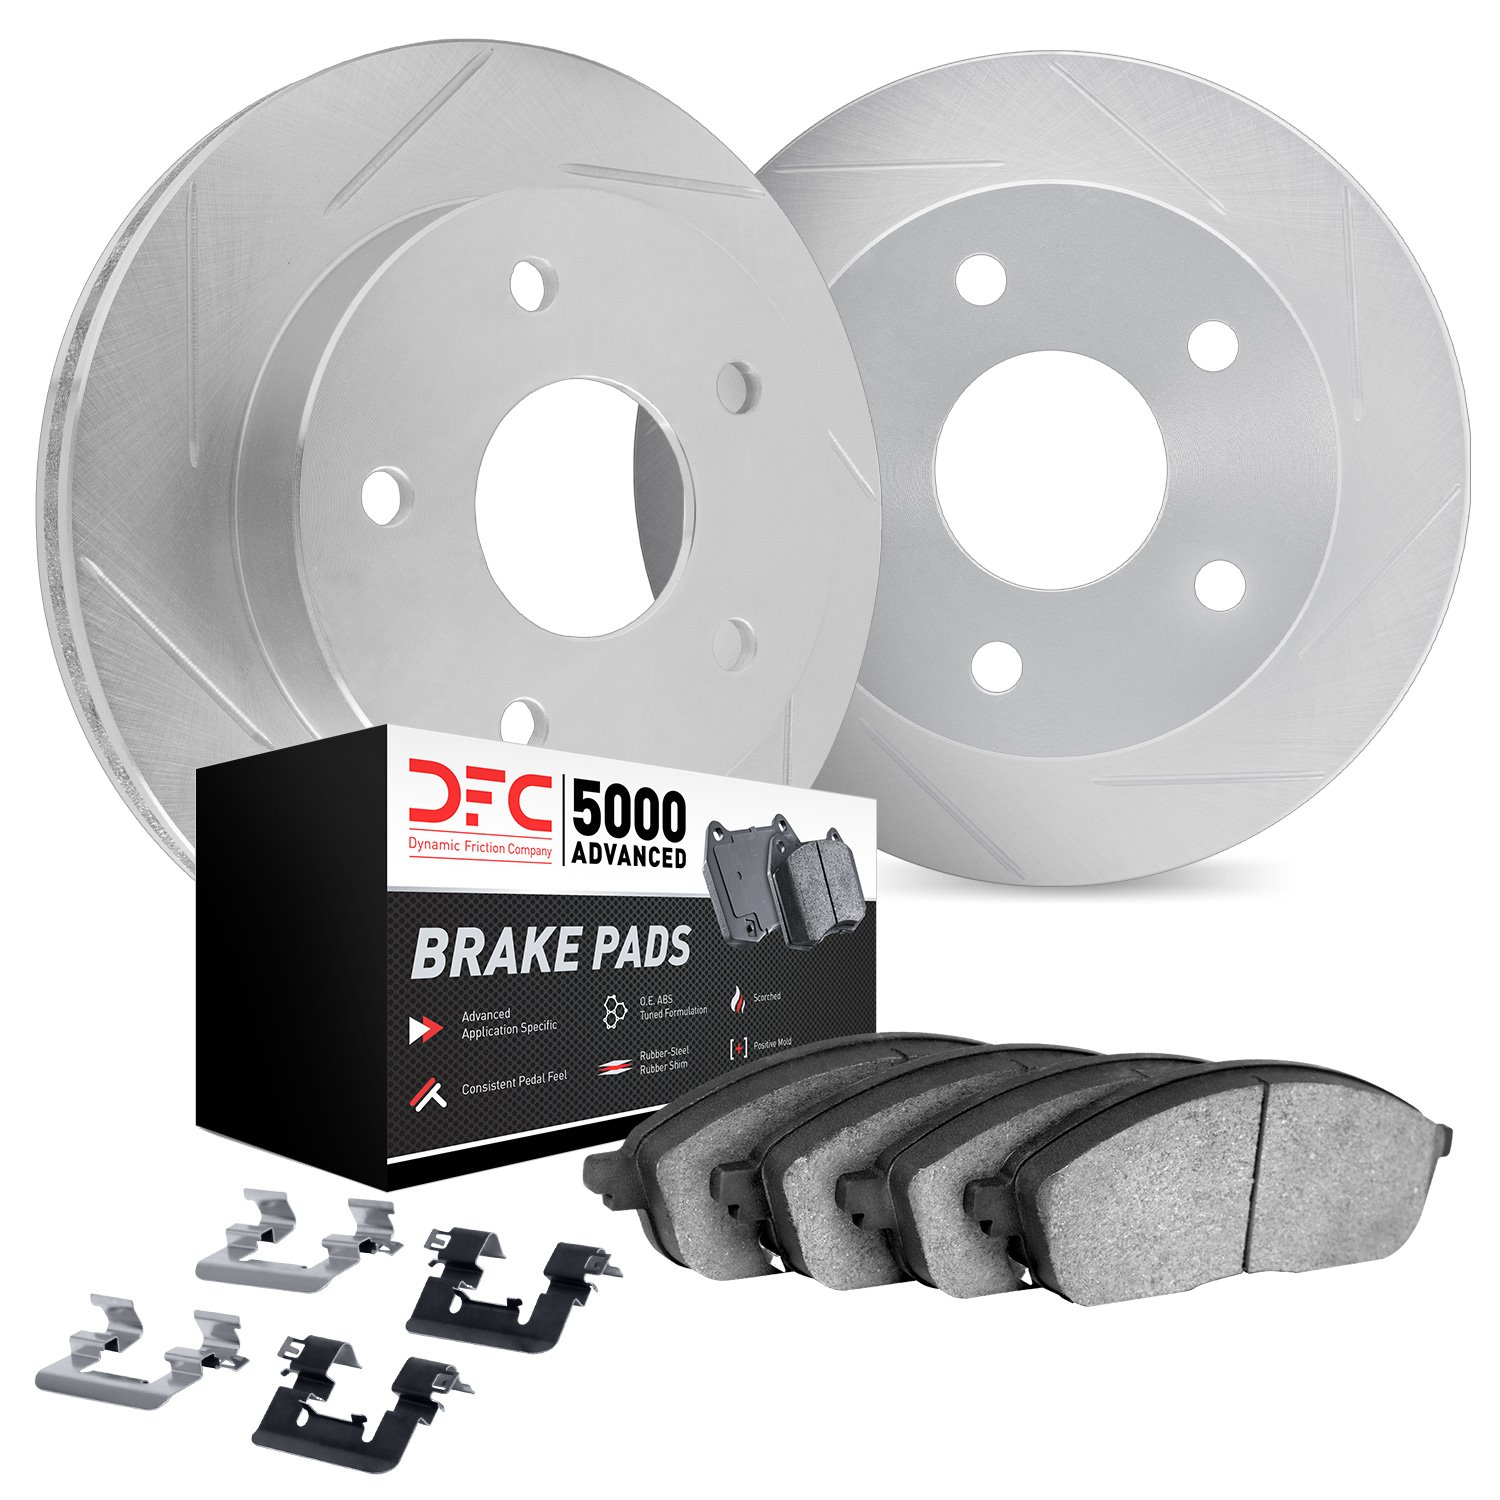 5512-39026 Slotted Brake Rotors w/5000 Advanced Brake Pads Kit & Hardware [Silver], Fits Select Multiple Makes/Models, Position: